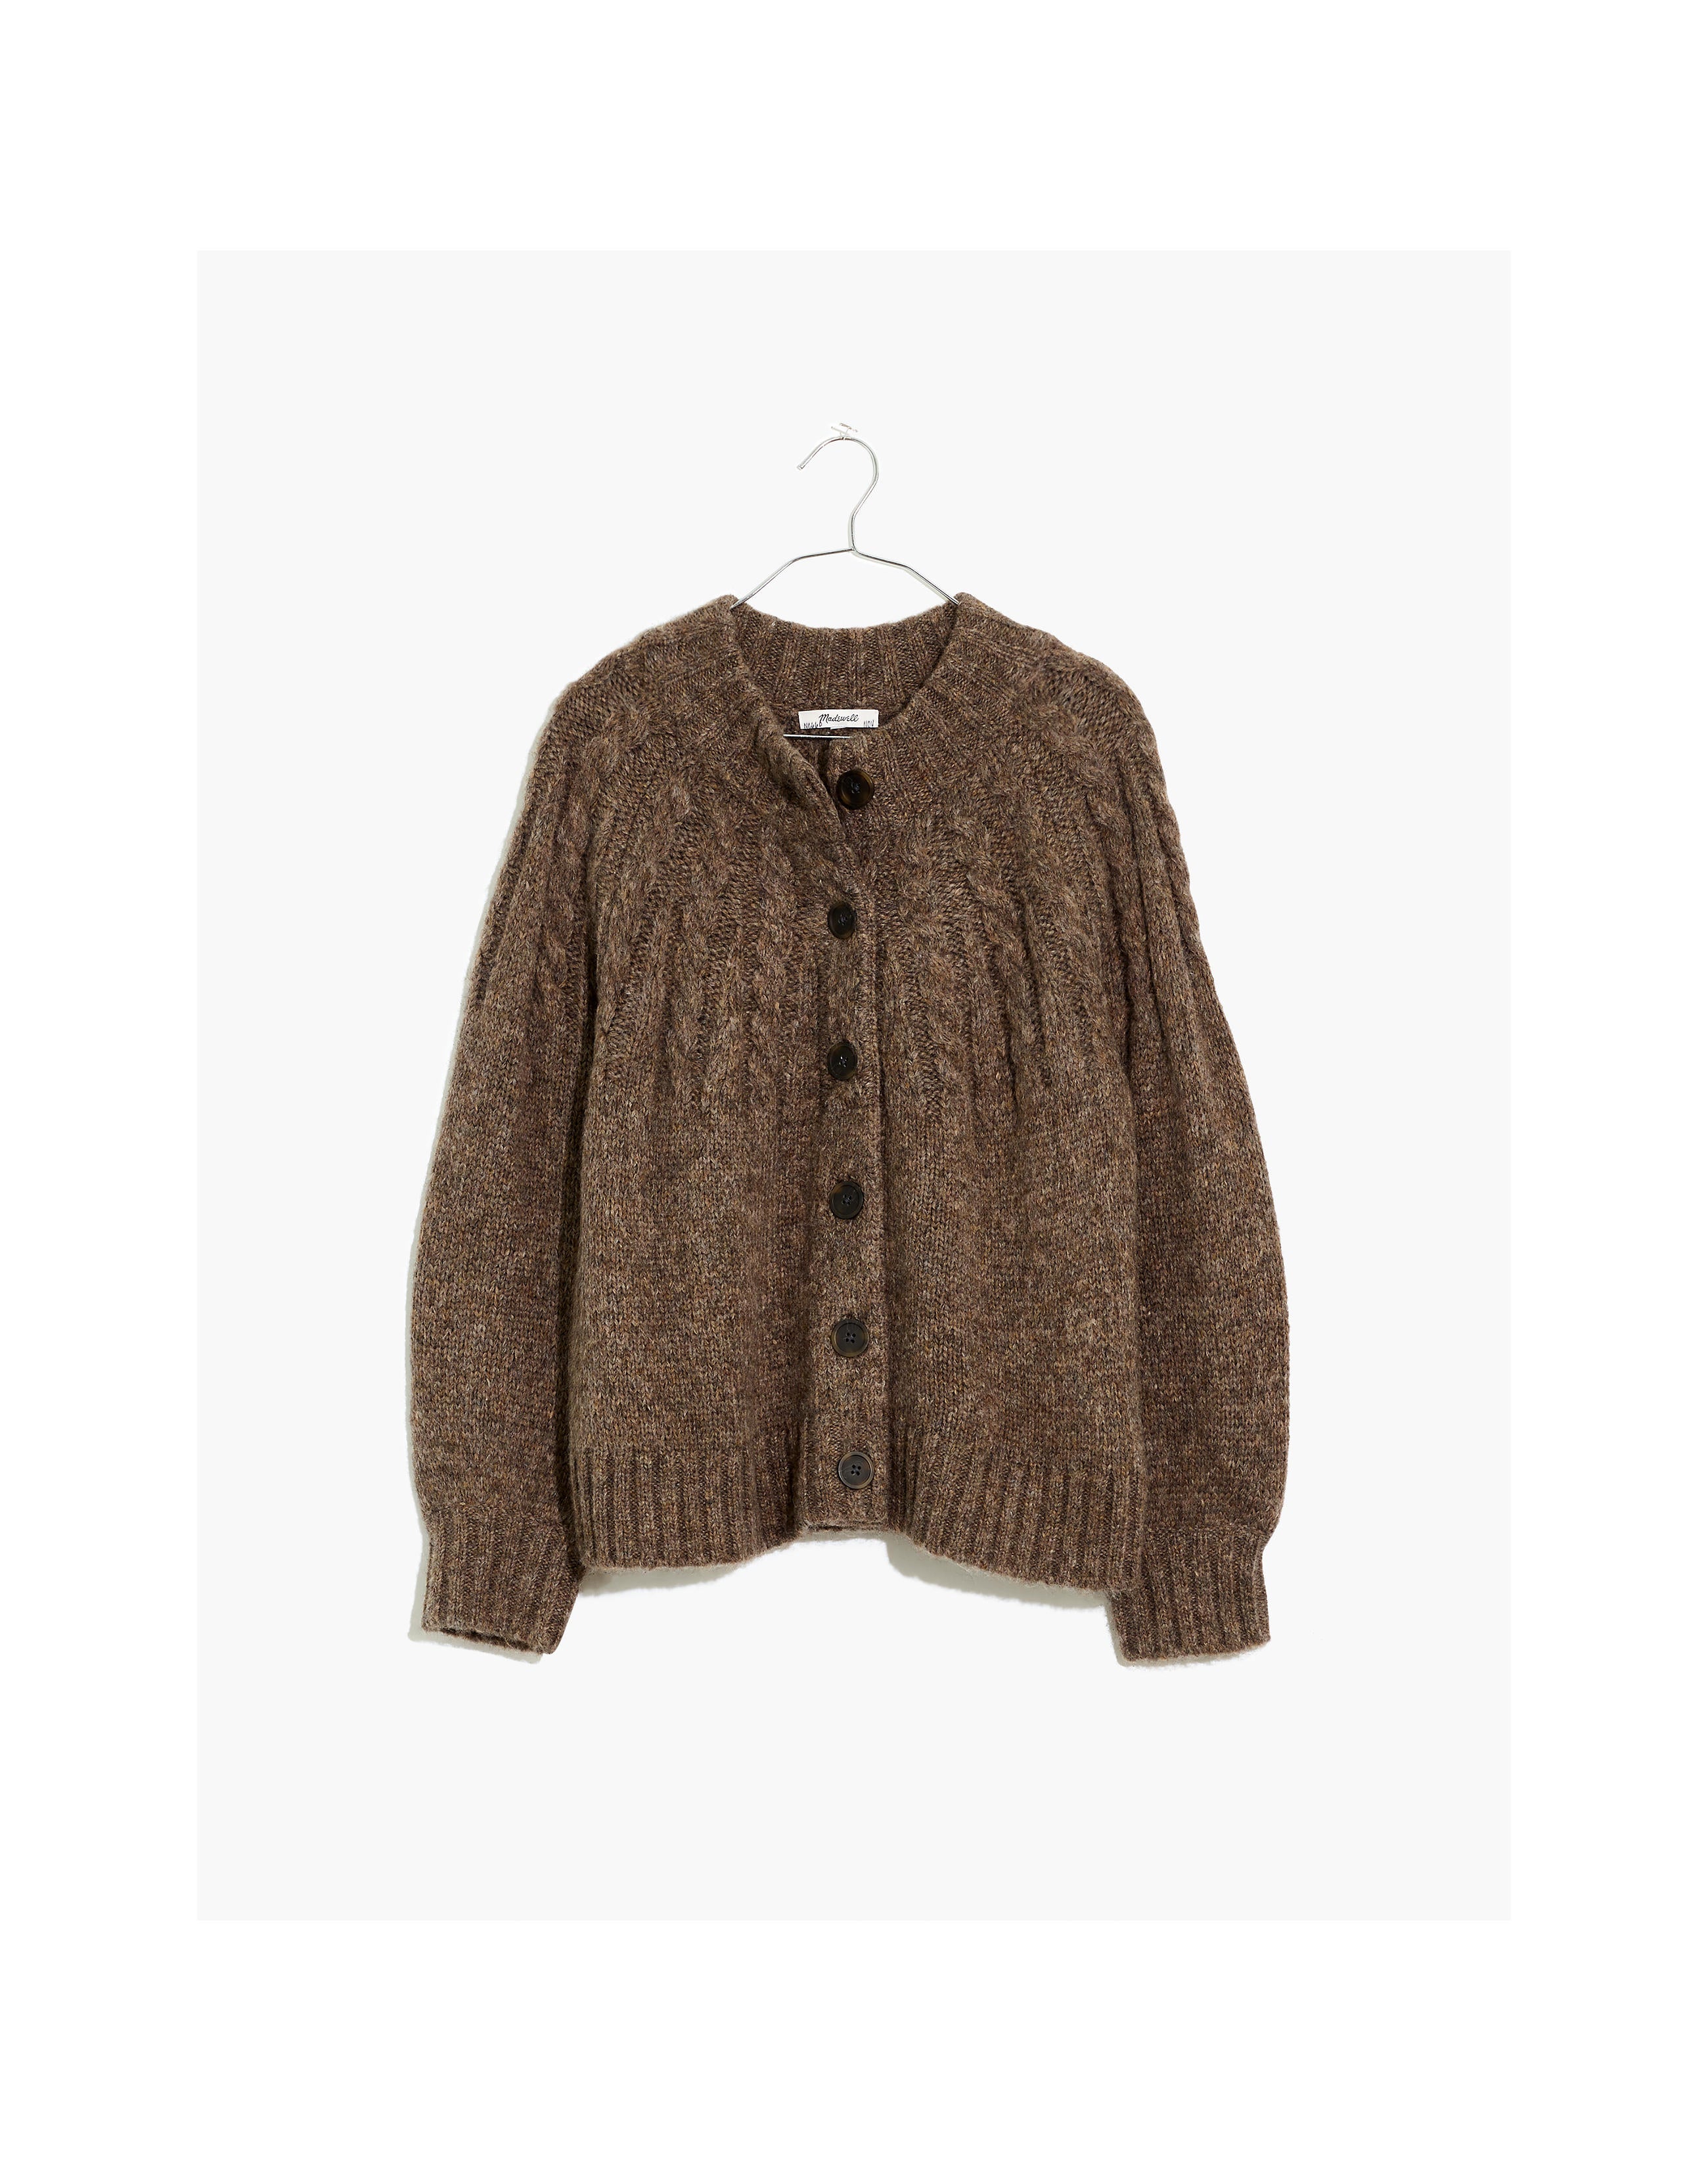 Madewell + Harwood Cableknit Mockneck Cardigan Sweater